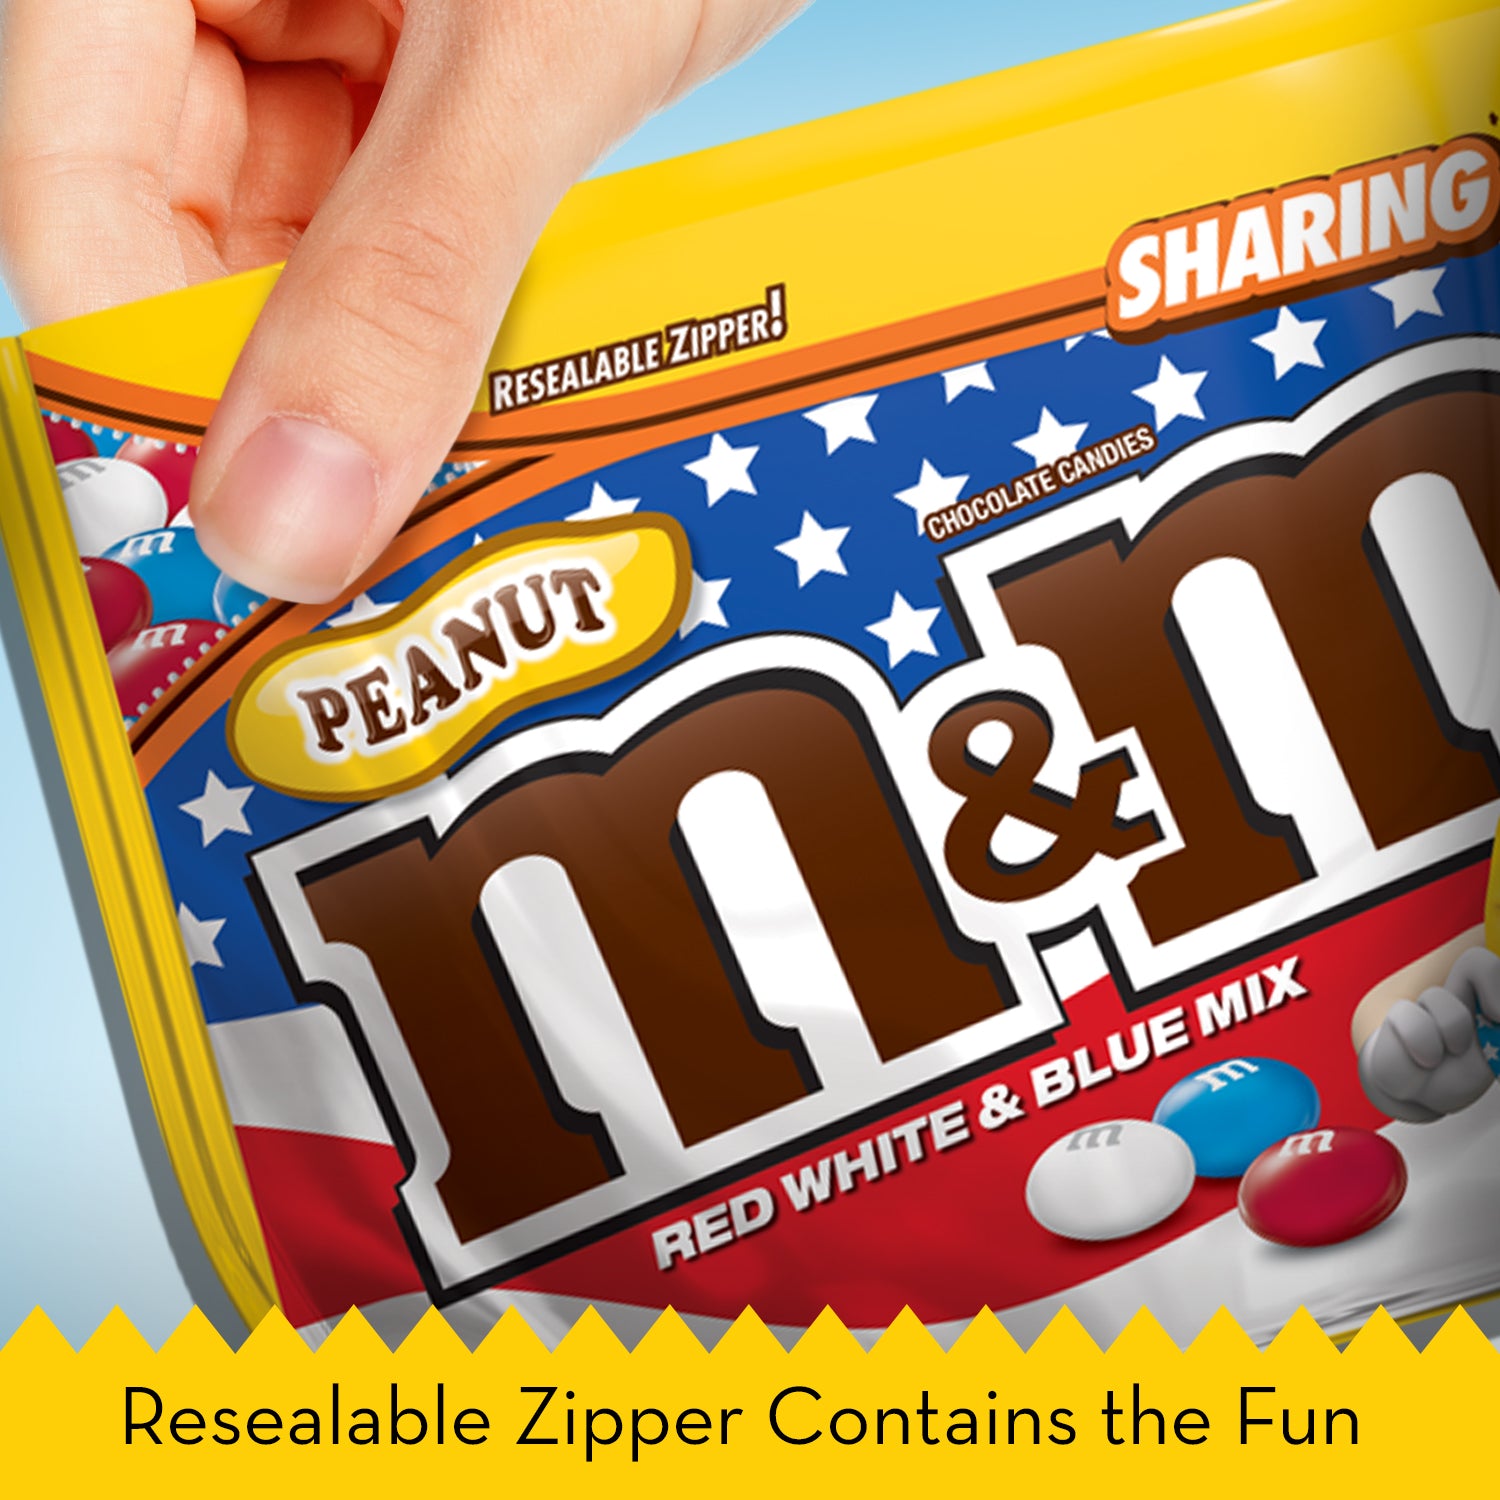 Peanut M&M's Milk Chocolate Candy - Dark Blue: 10-Ounce Bag